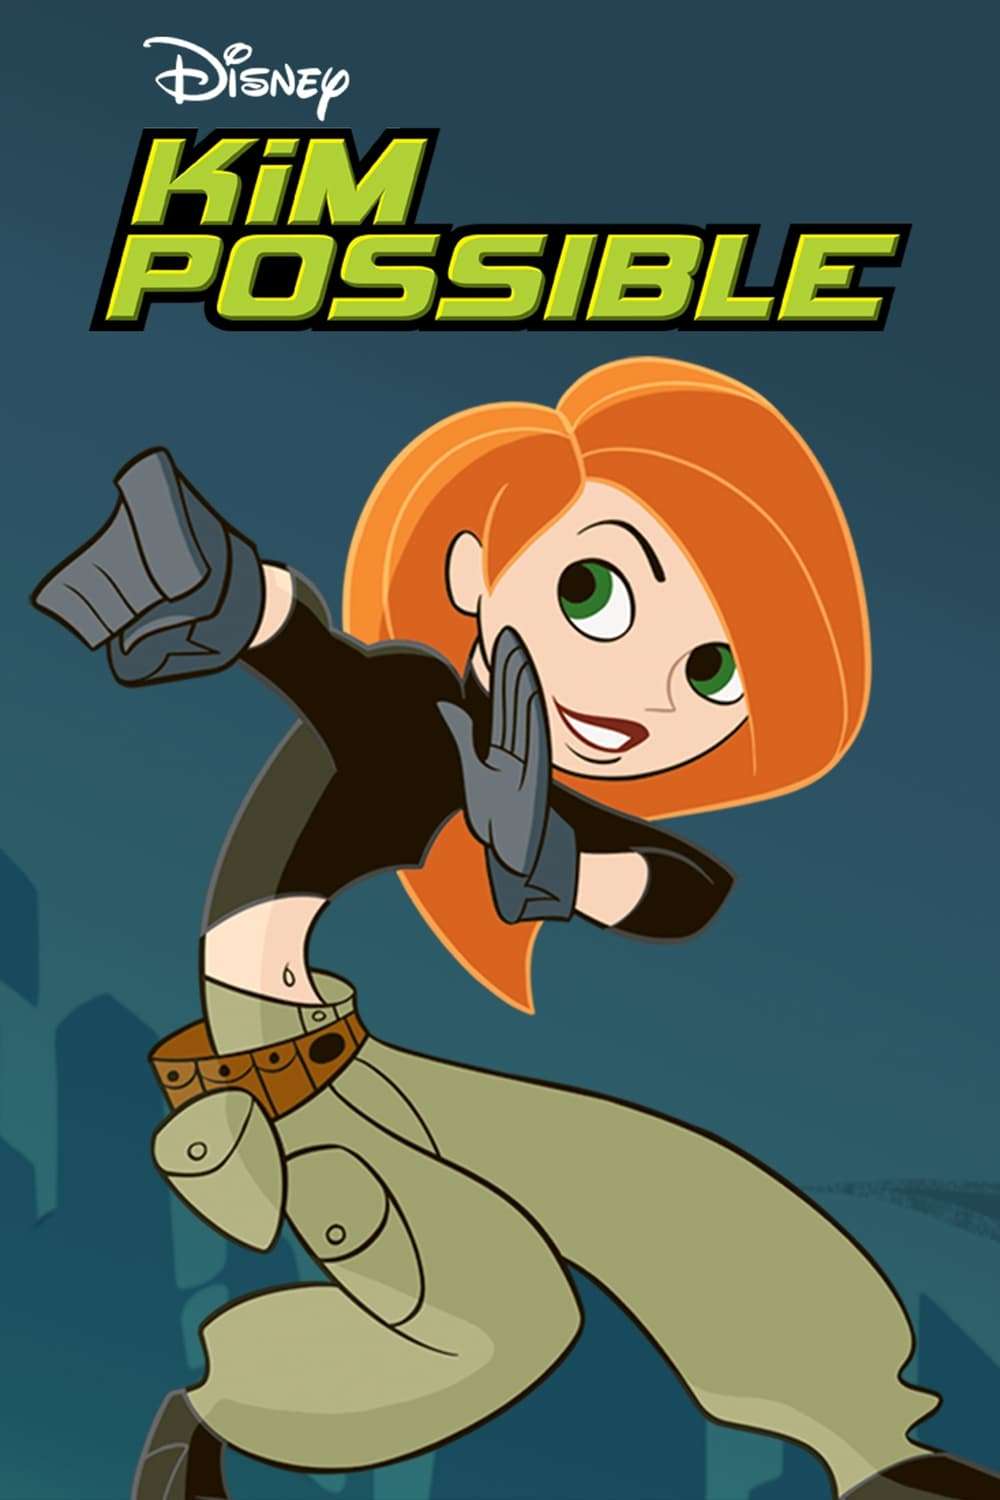 Kim Possible (TV Series 2002)